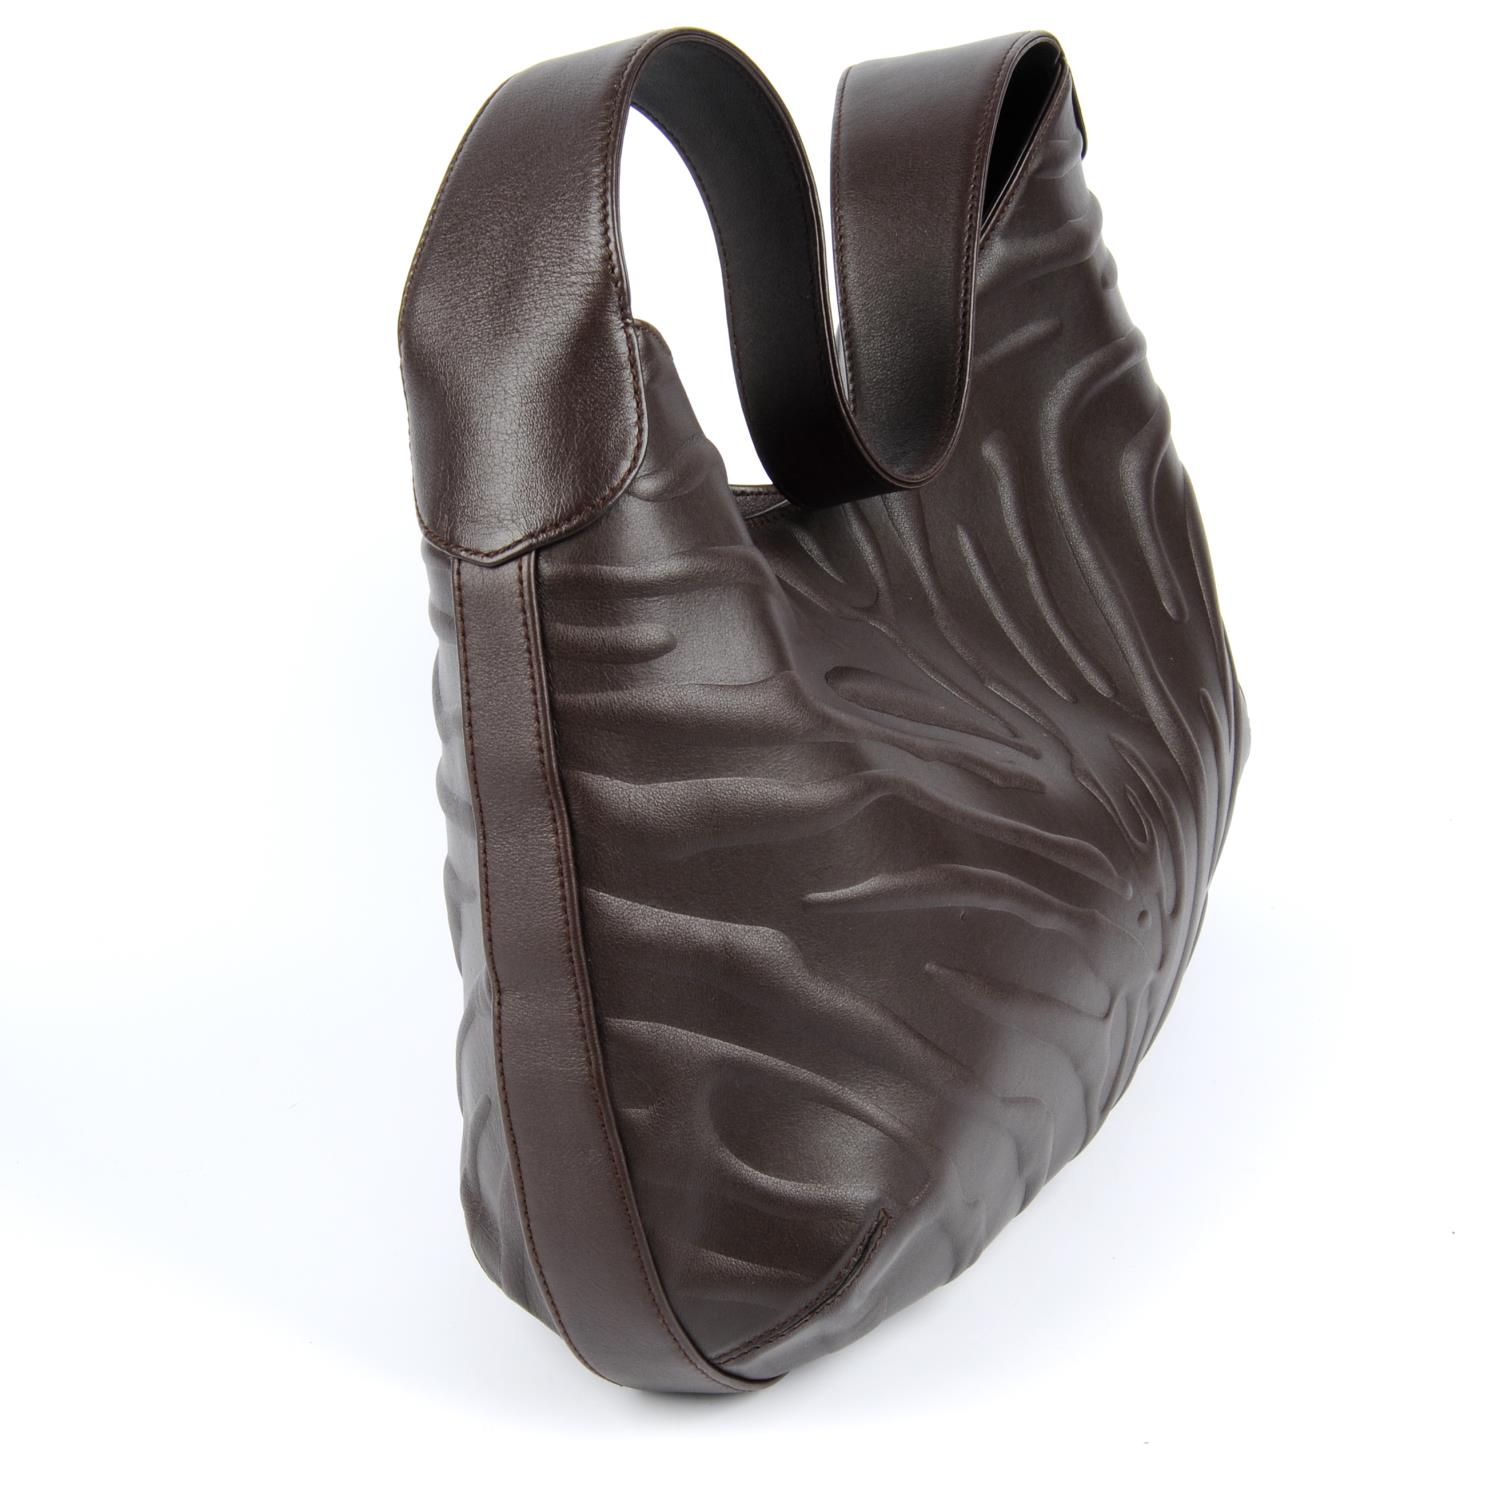 CARTIER - a medium brown Panthère hobo handbag. - Image 3 of 4